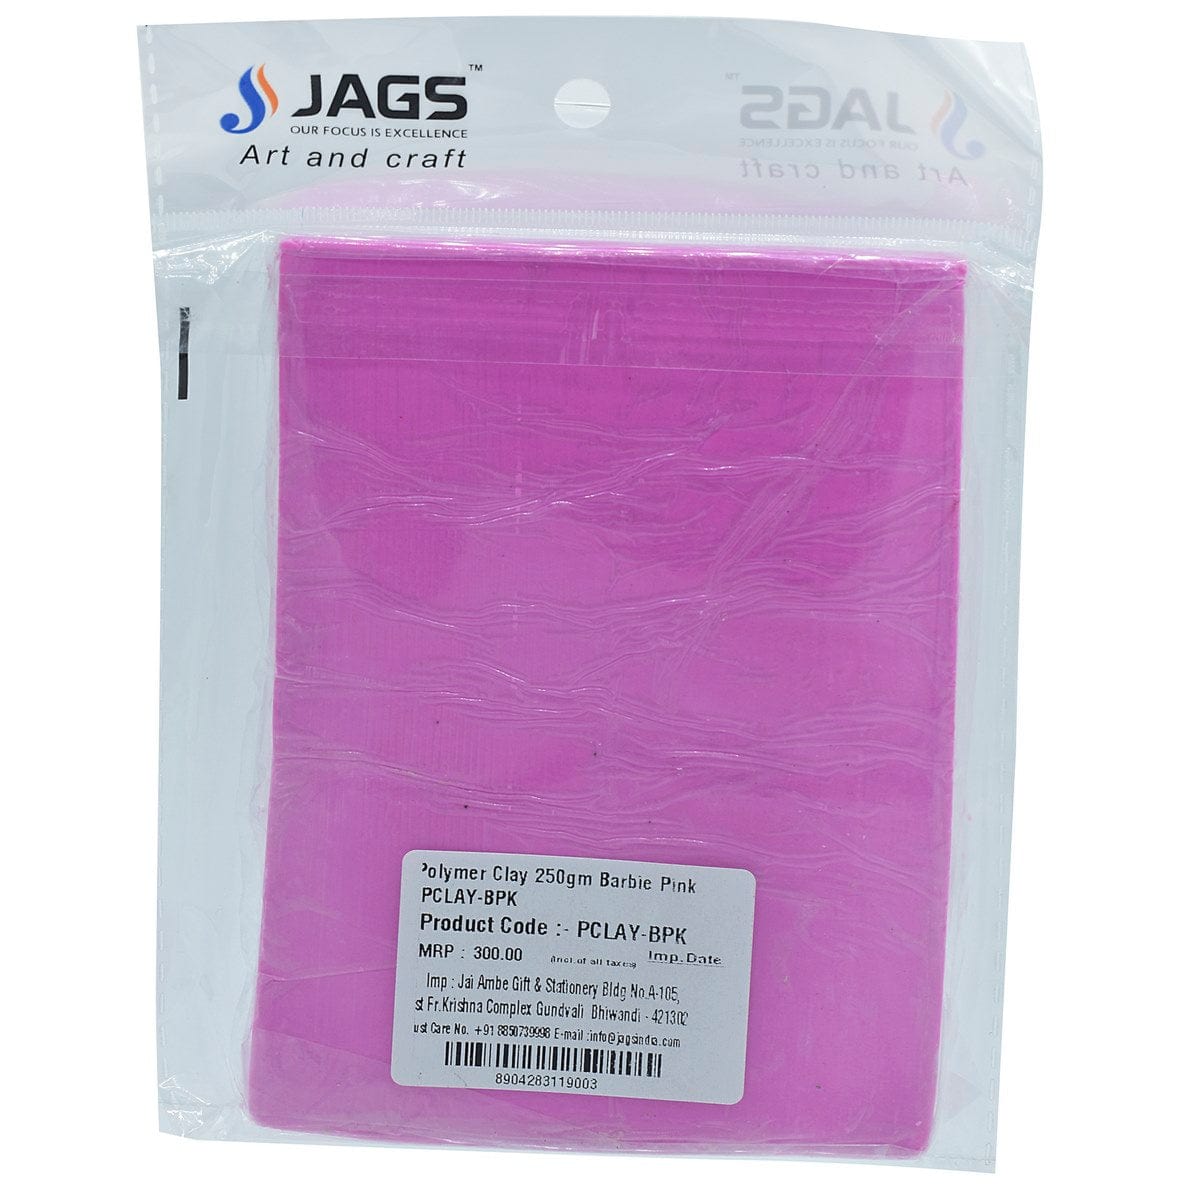 jags-mumbai Clay Polymer Clay 250gm Barbie Pink PCLAY-BPK